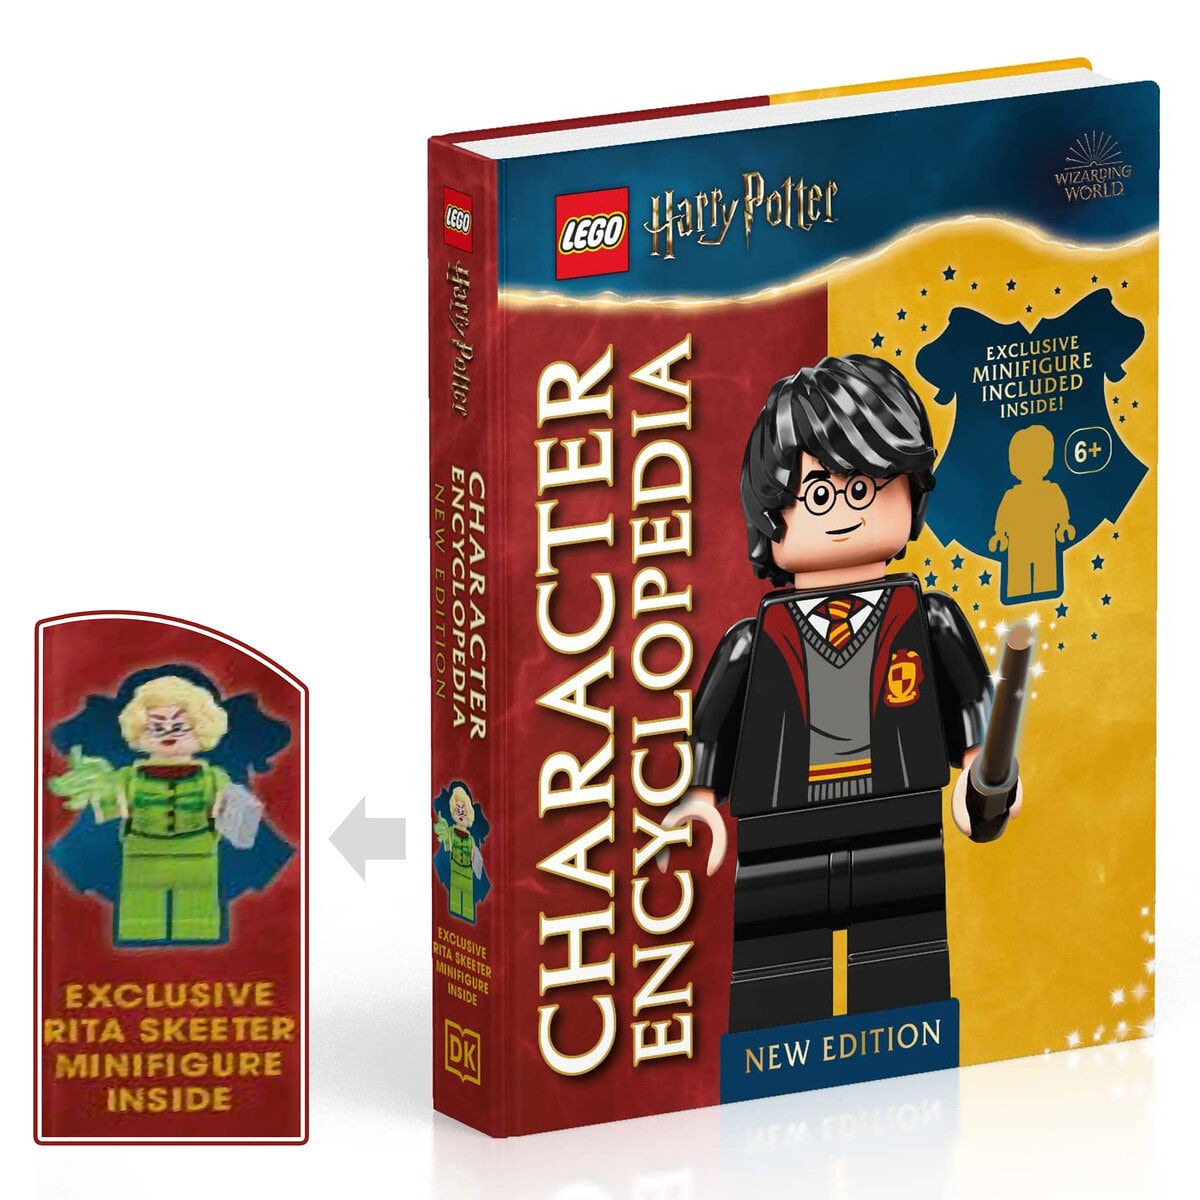 LEGO Harry Potter Character Encyclopedia New Edition : la minifig exclusive  sera Rita Skeeter - HelloBricks